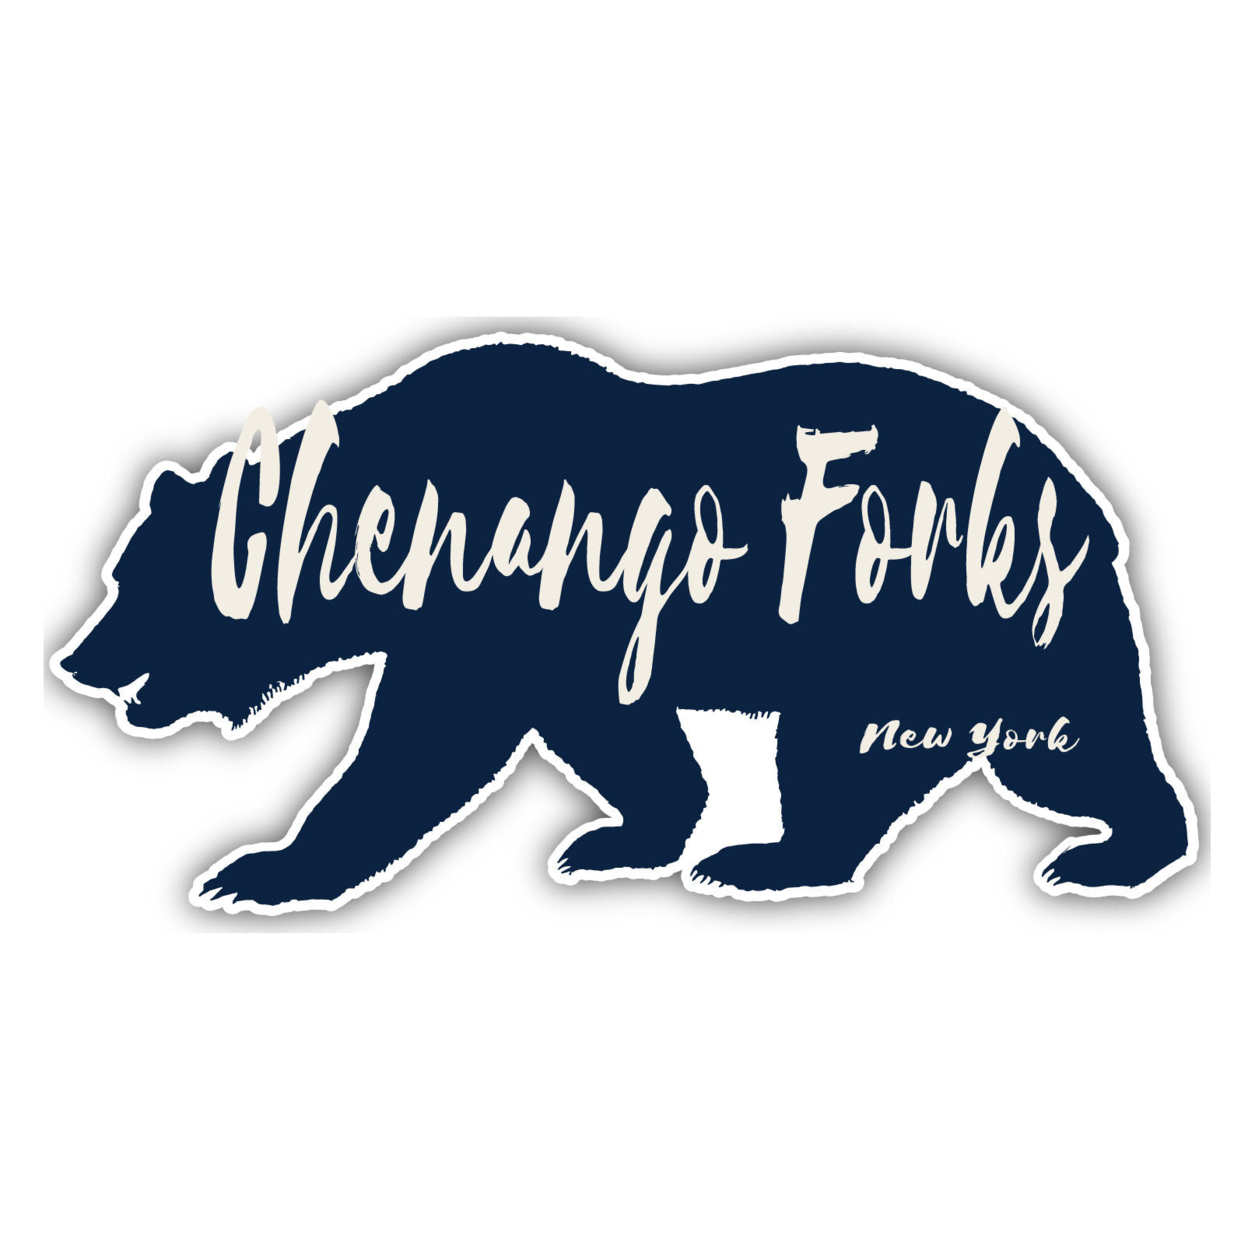 Chenango Forks New York Souvenir Decorative Stickers (Choose Theme And Size) - Single Unit, 8-Inch, Bear